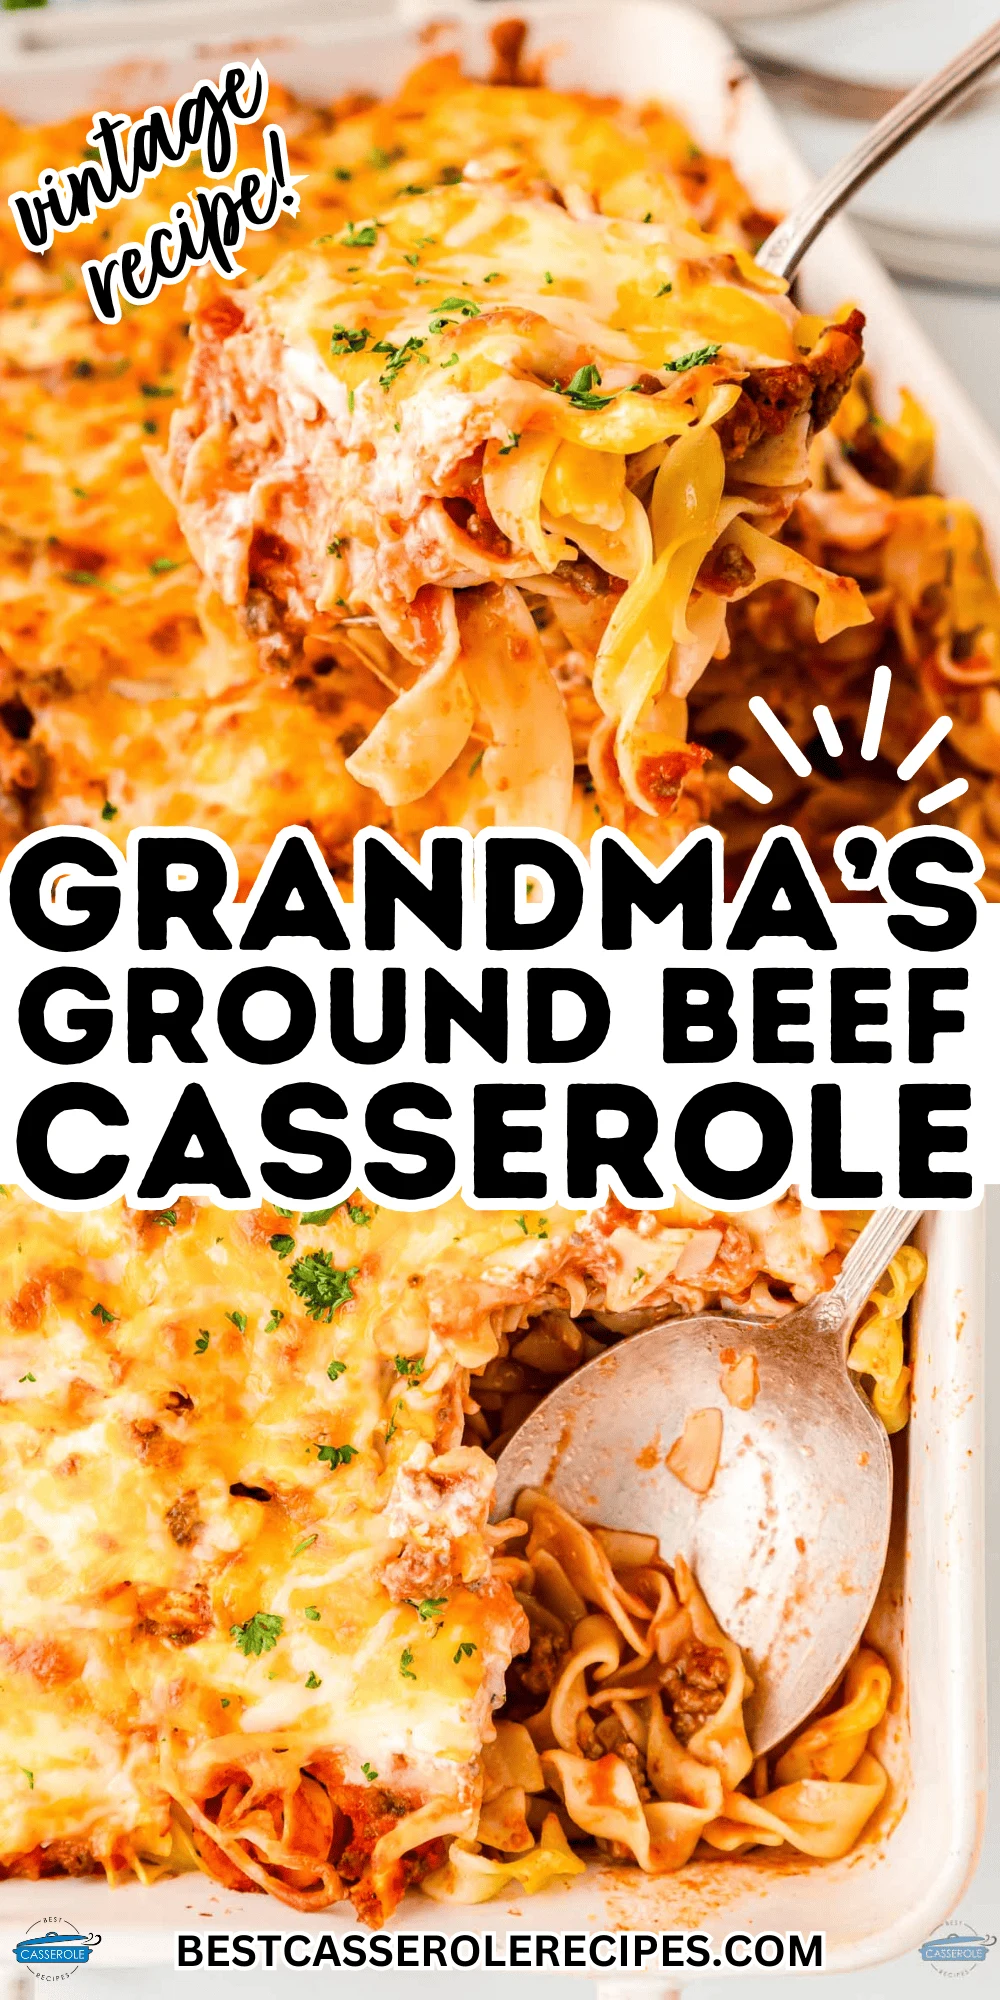 grandma's ground beef casserole recipe collage